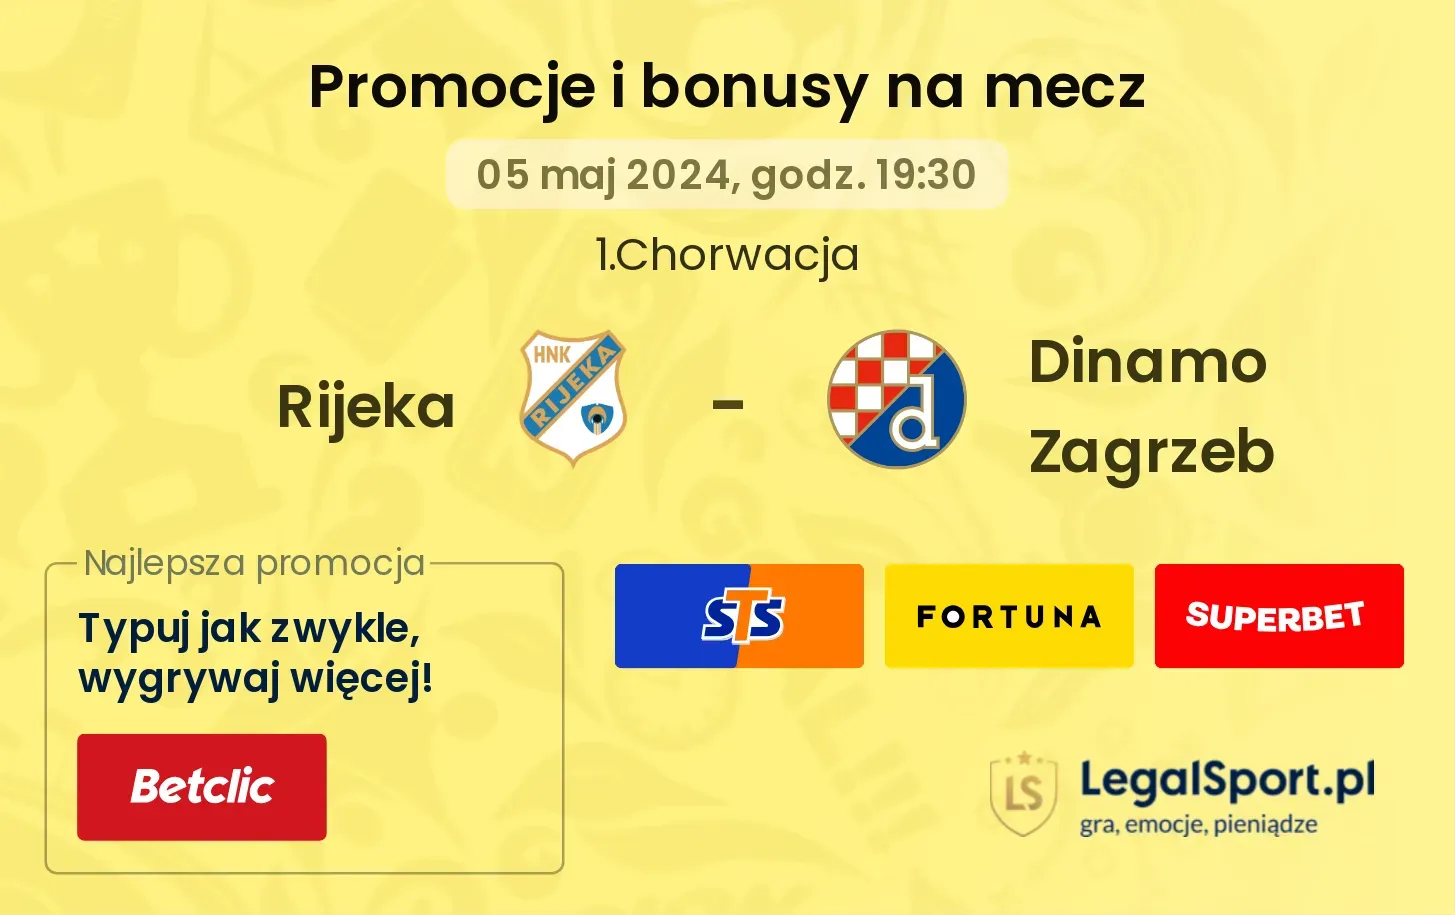 Rijeka - Dinamo Zagrzeb promocje bonusy na mecz